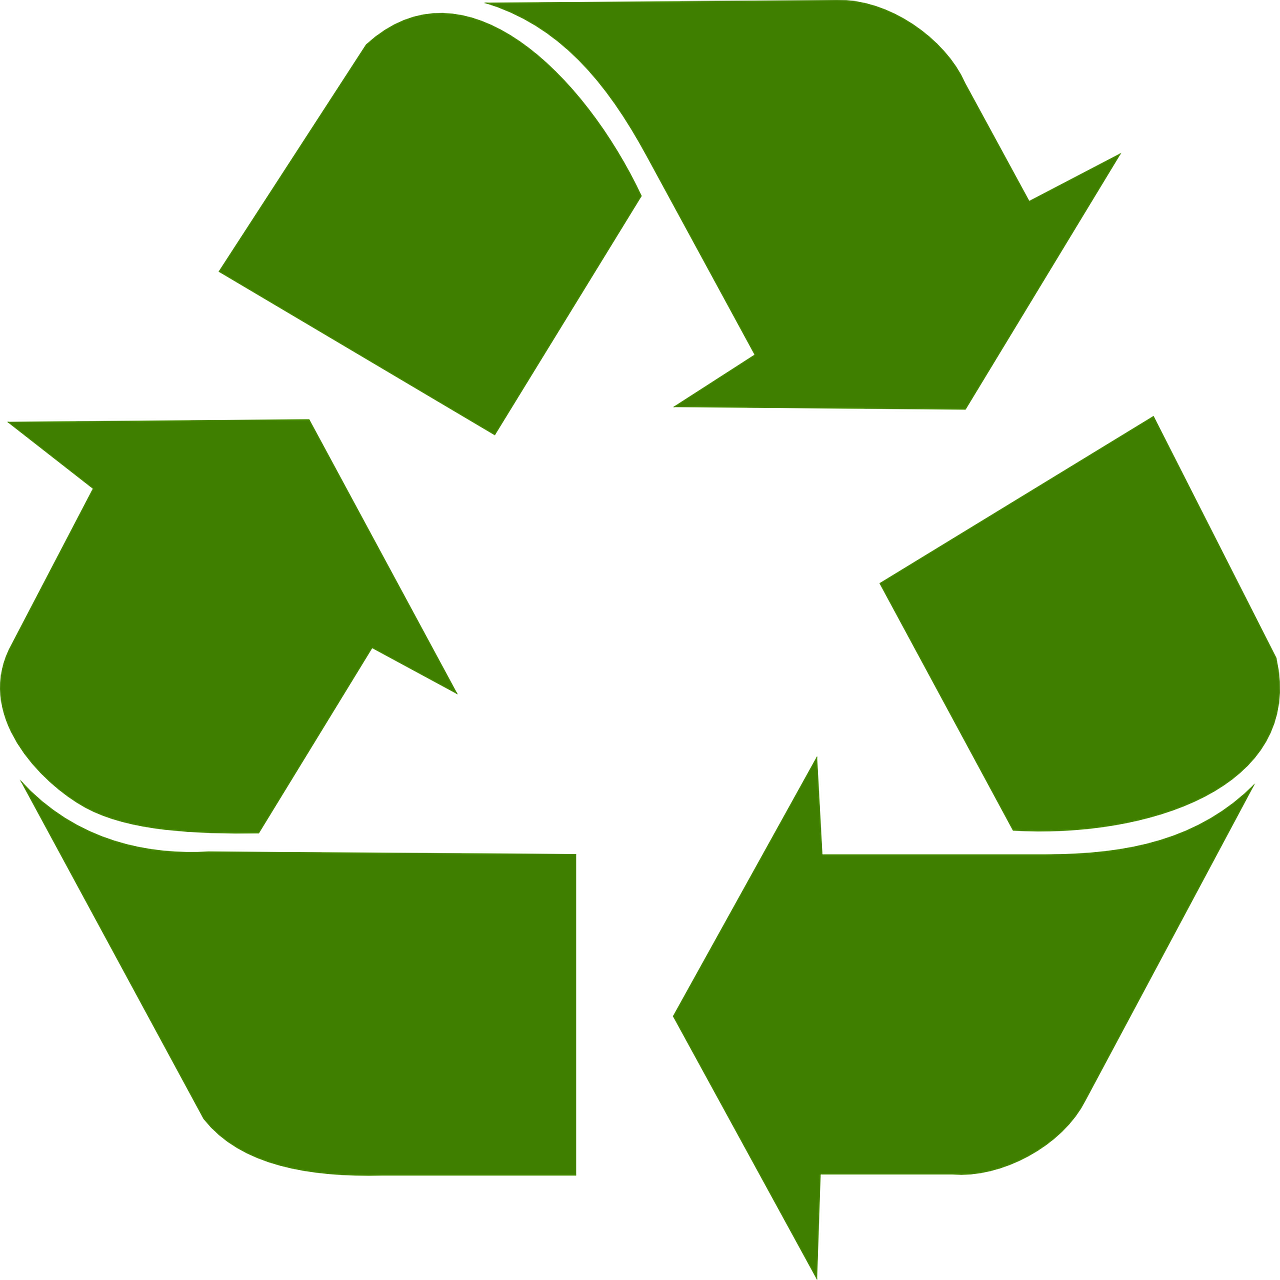 recycling symbol logo free photo